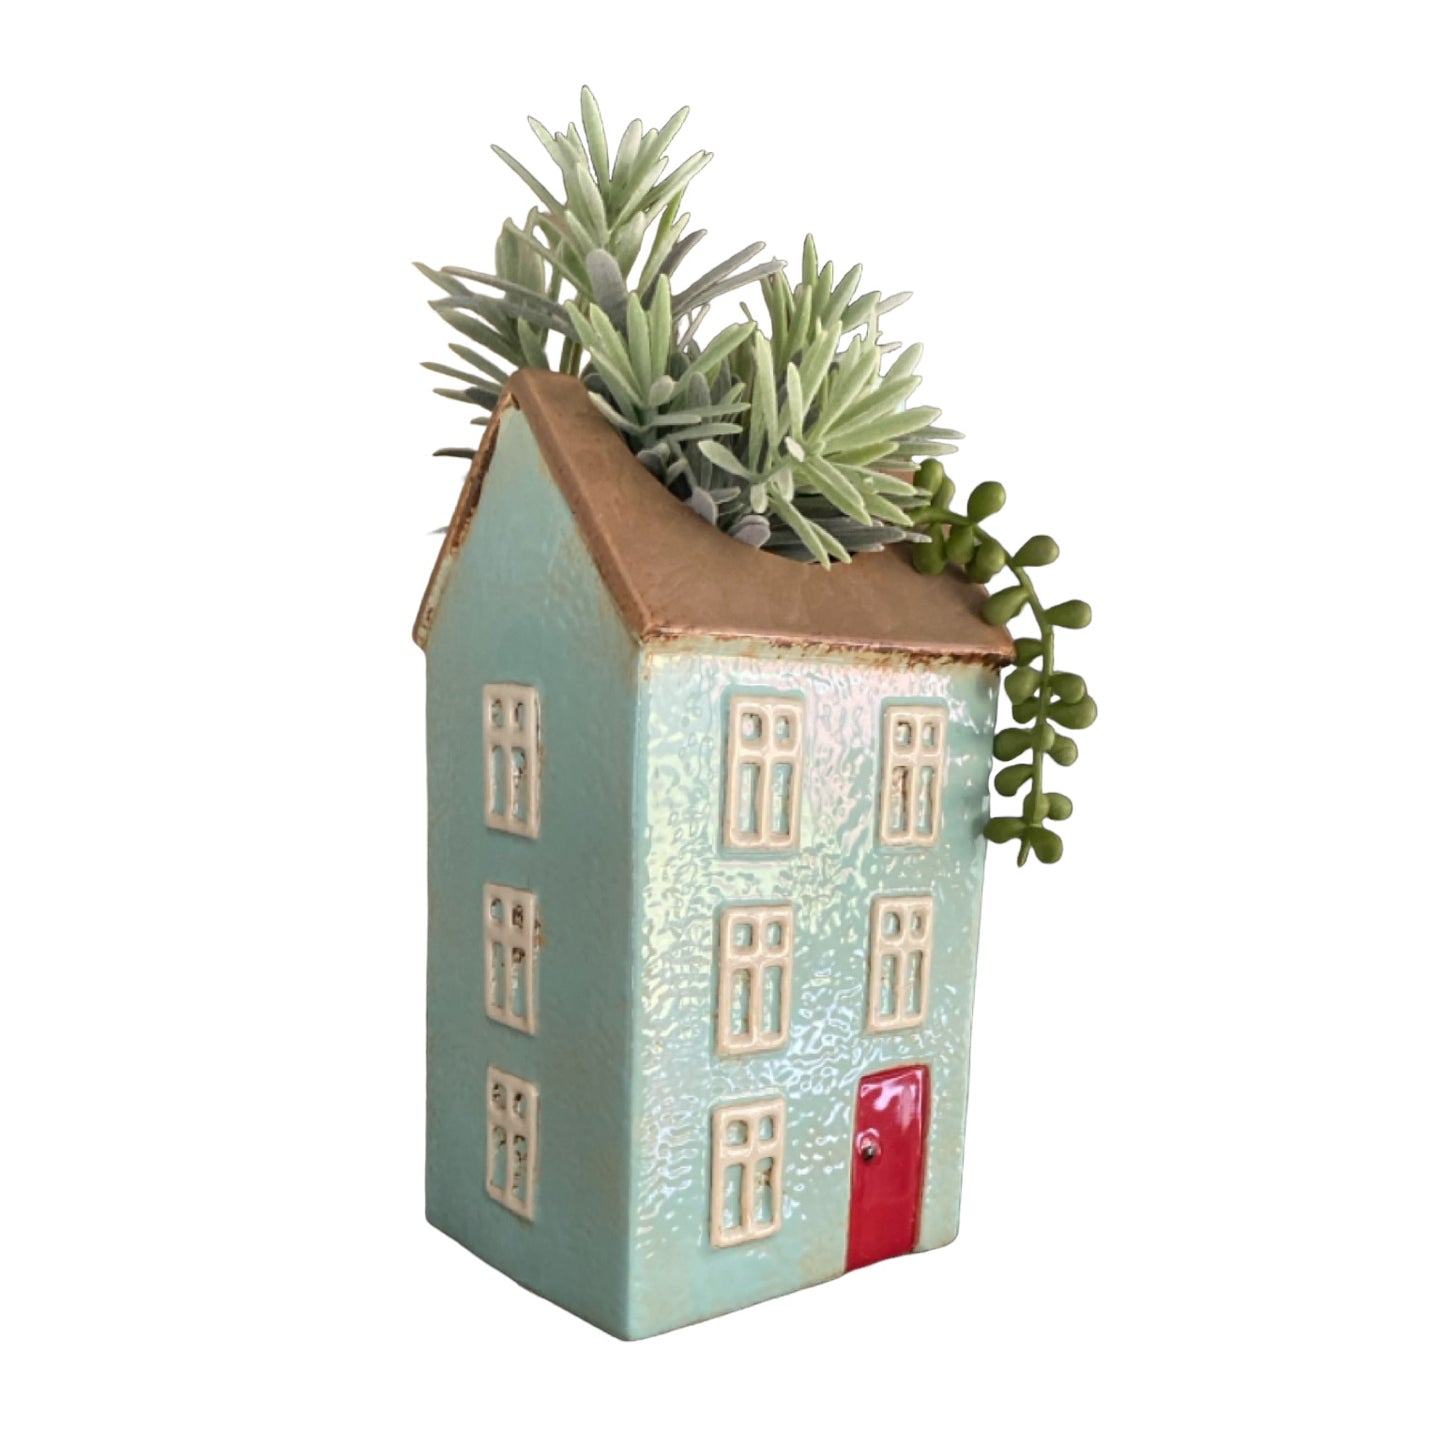 Village House Aqua Pot Plant Planter - The Renmy Store Homewares & Gifts 